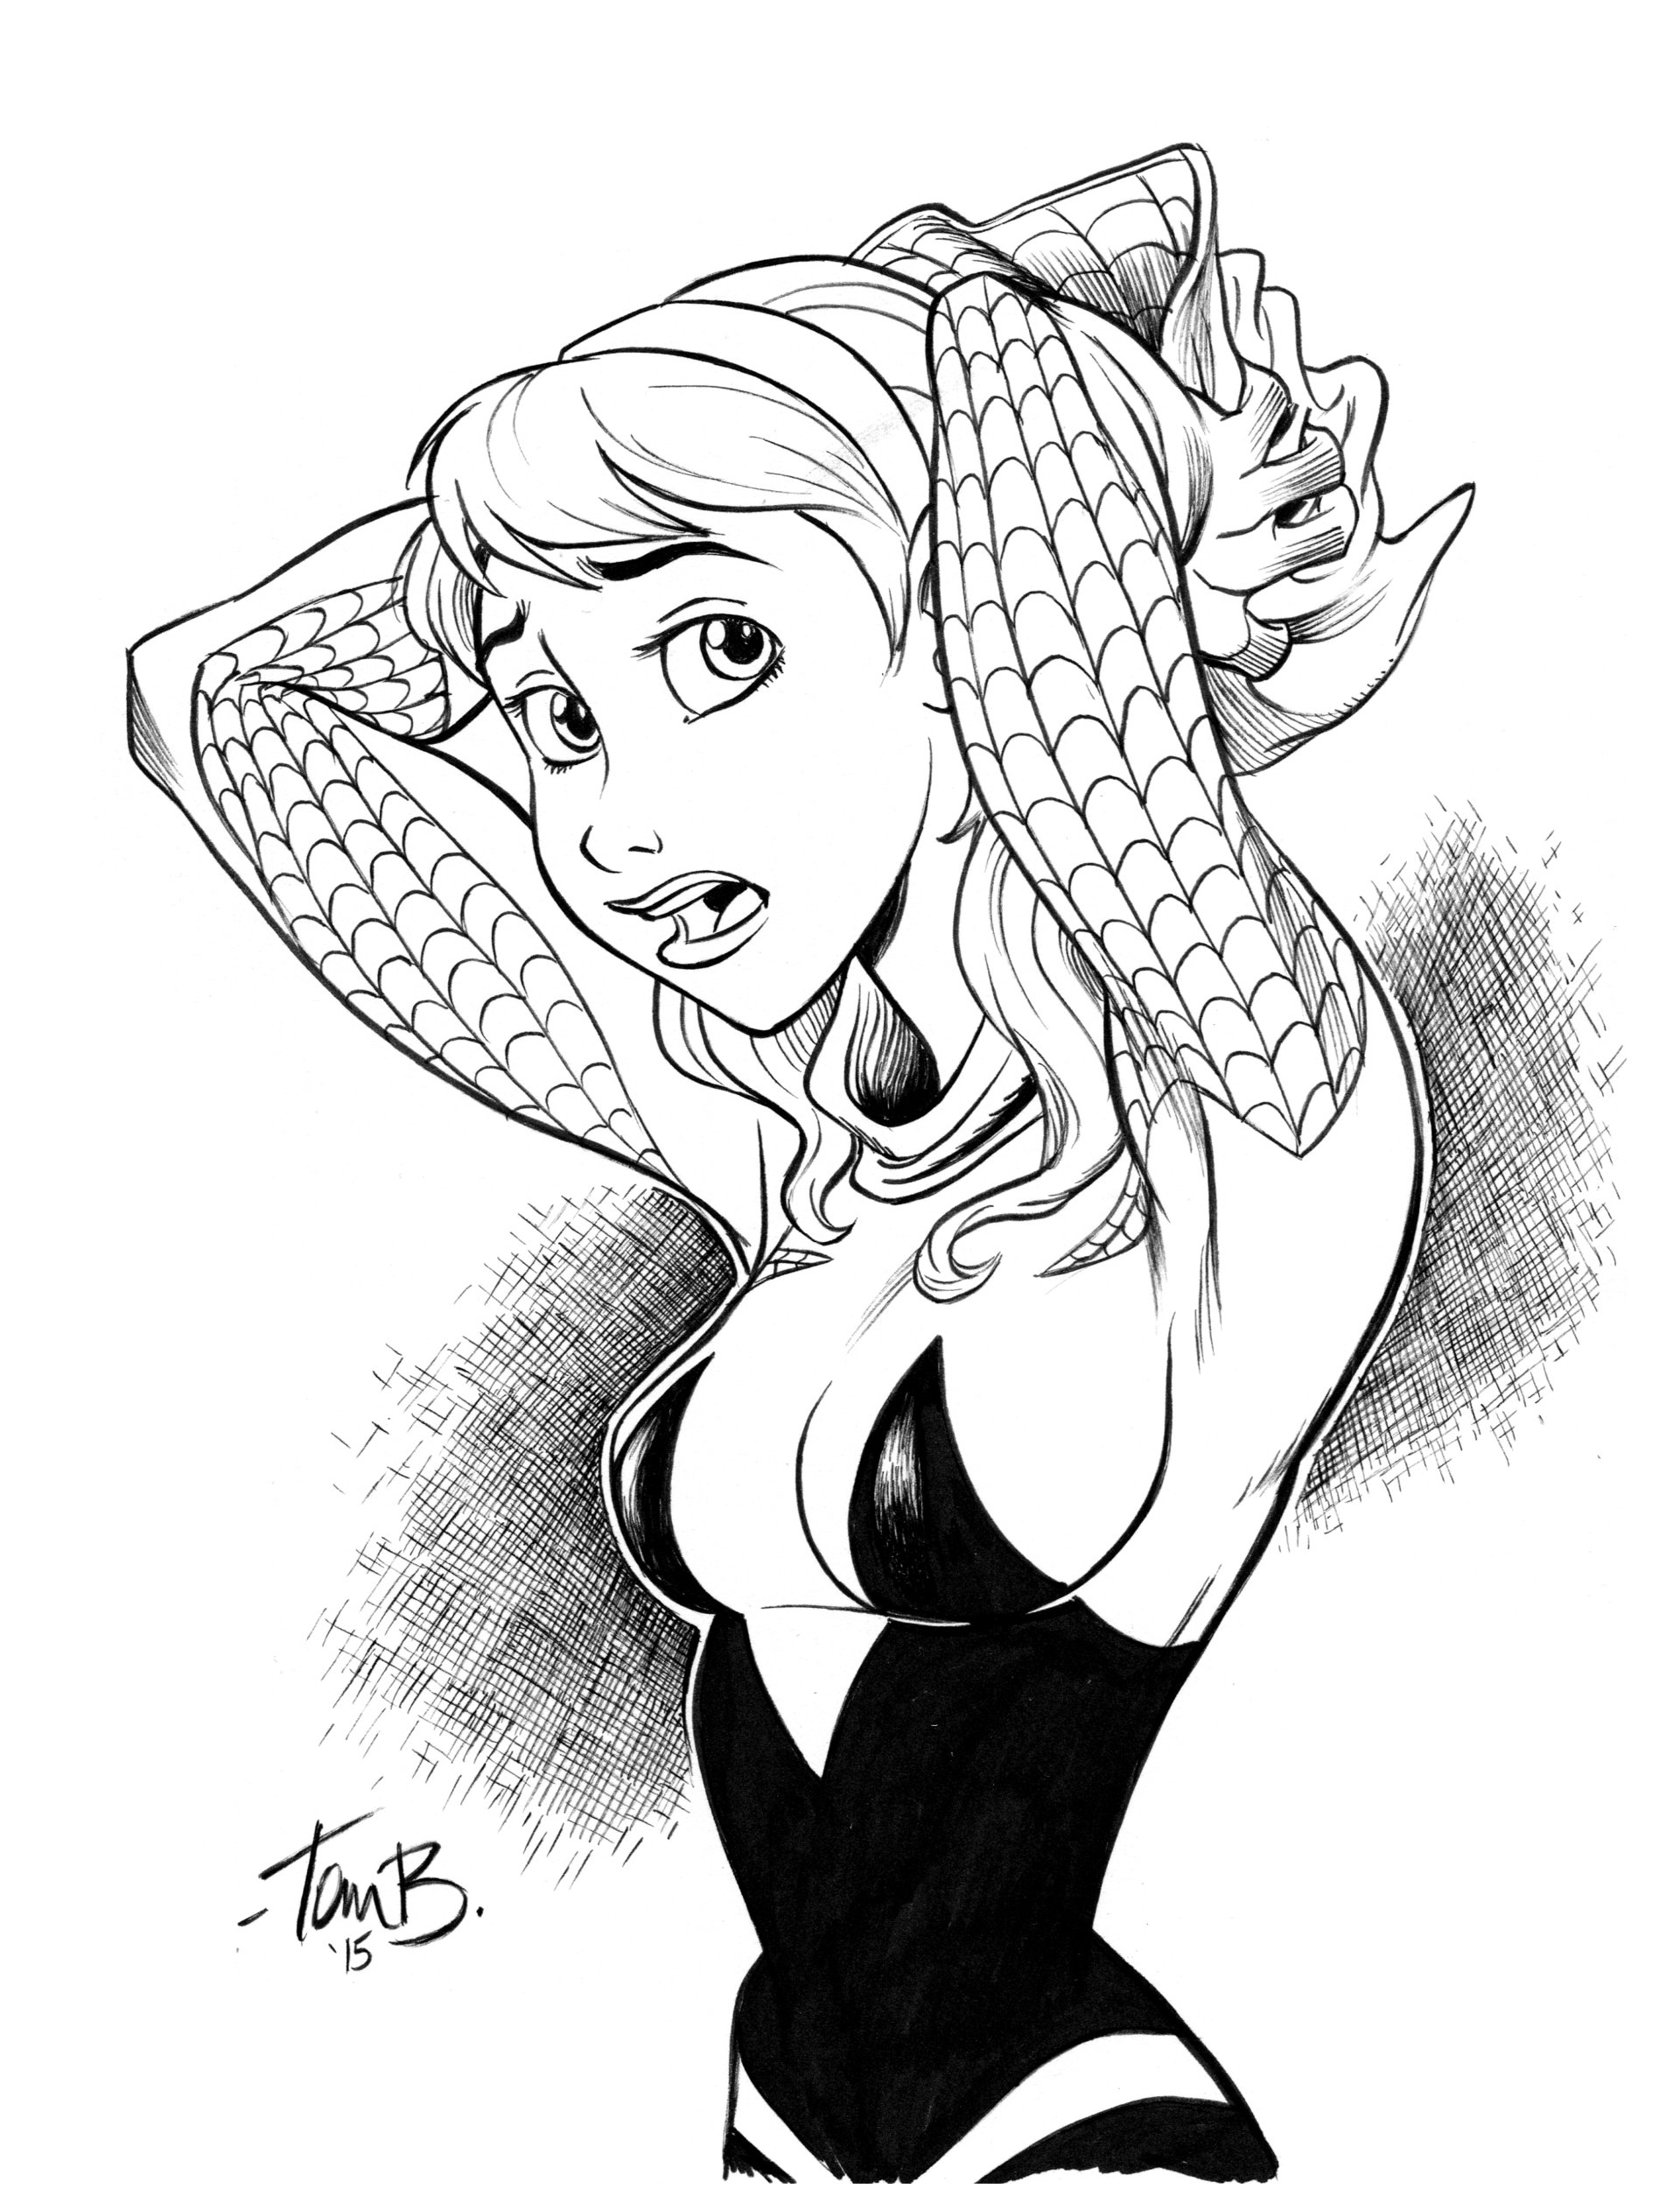 Gwen Stacy - Spider Woman.